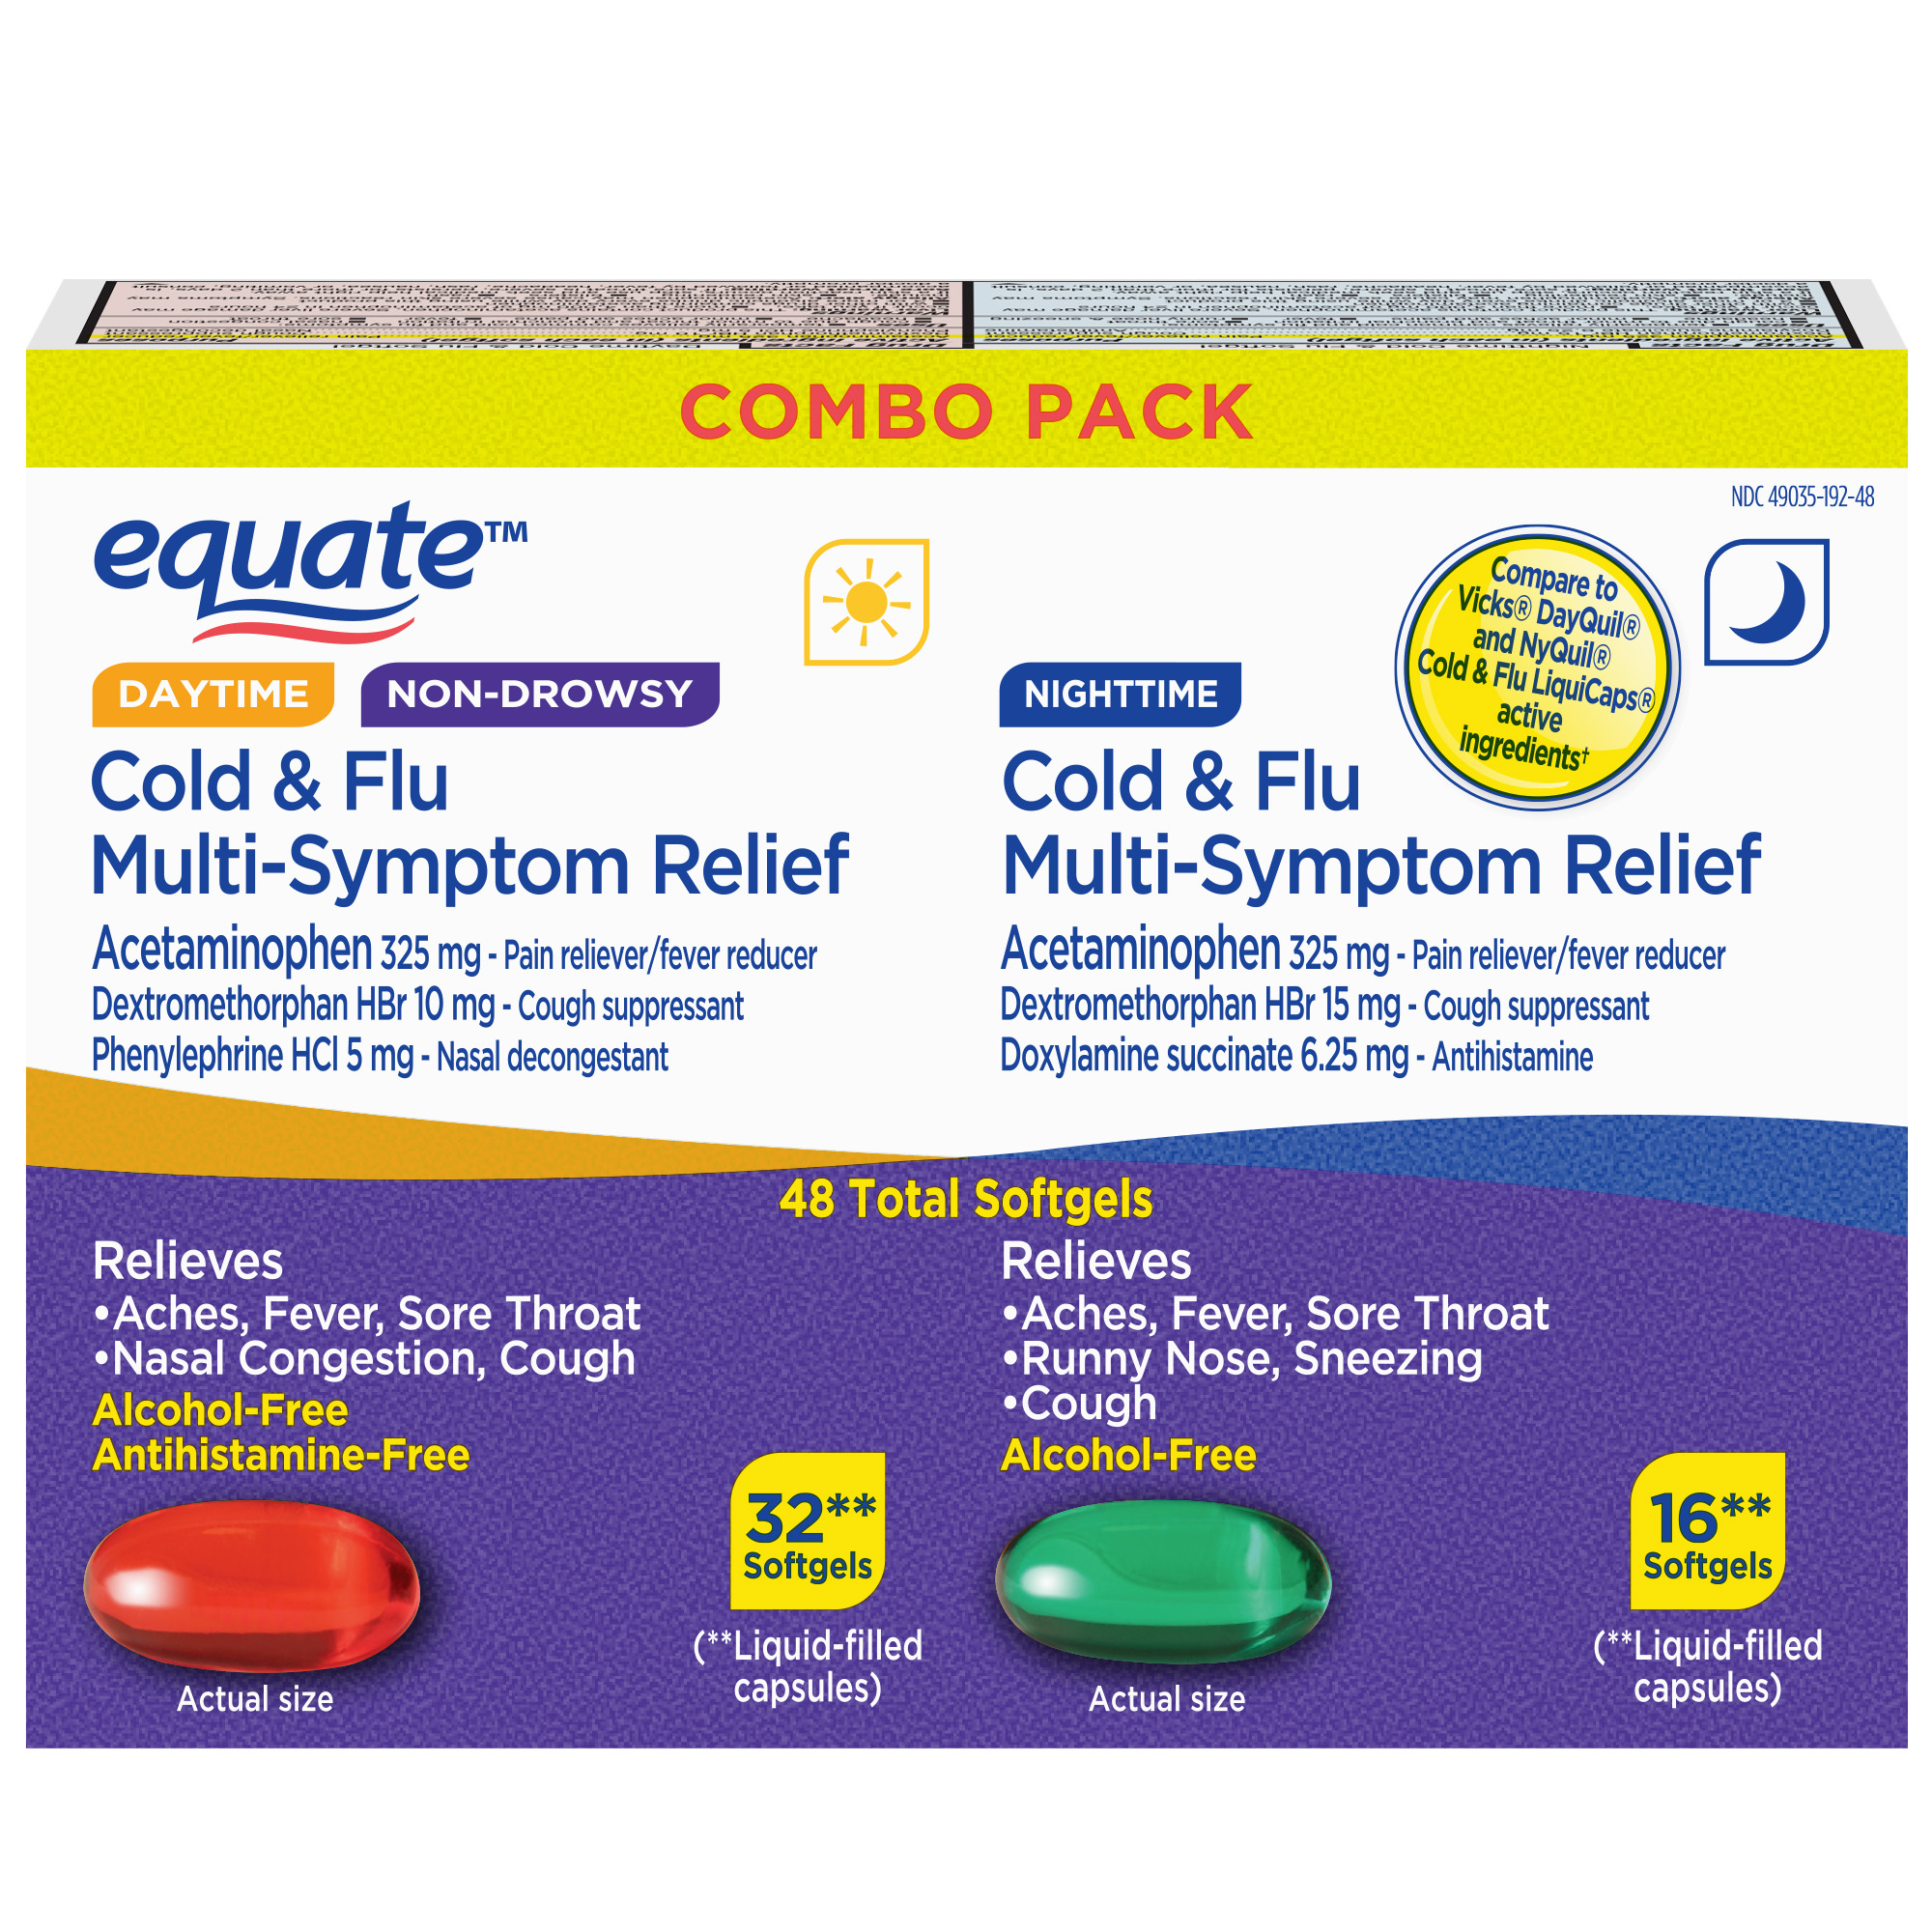 Equate Daytime & Nighttime Cold & Flu Multi-Symptom Relief, 48 Softgels - image 1 of 10